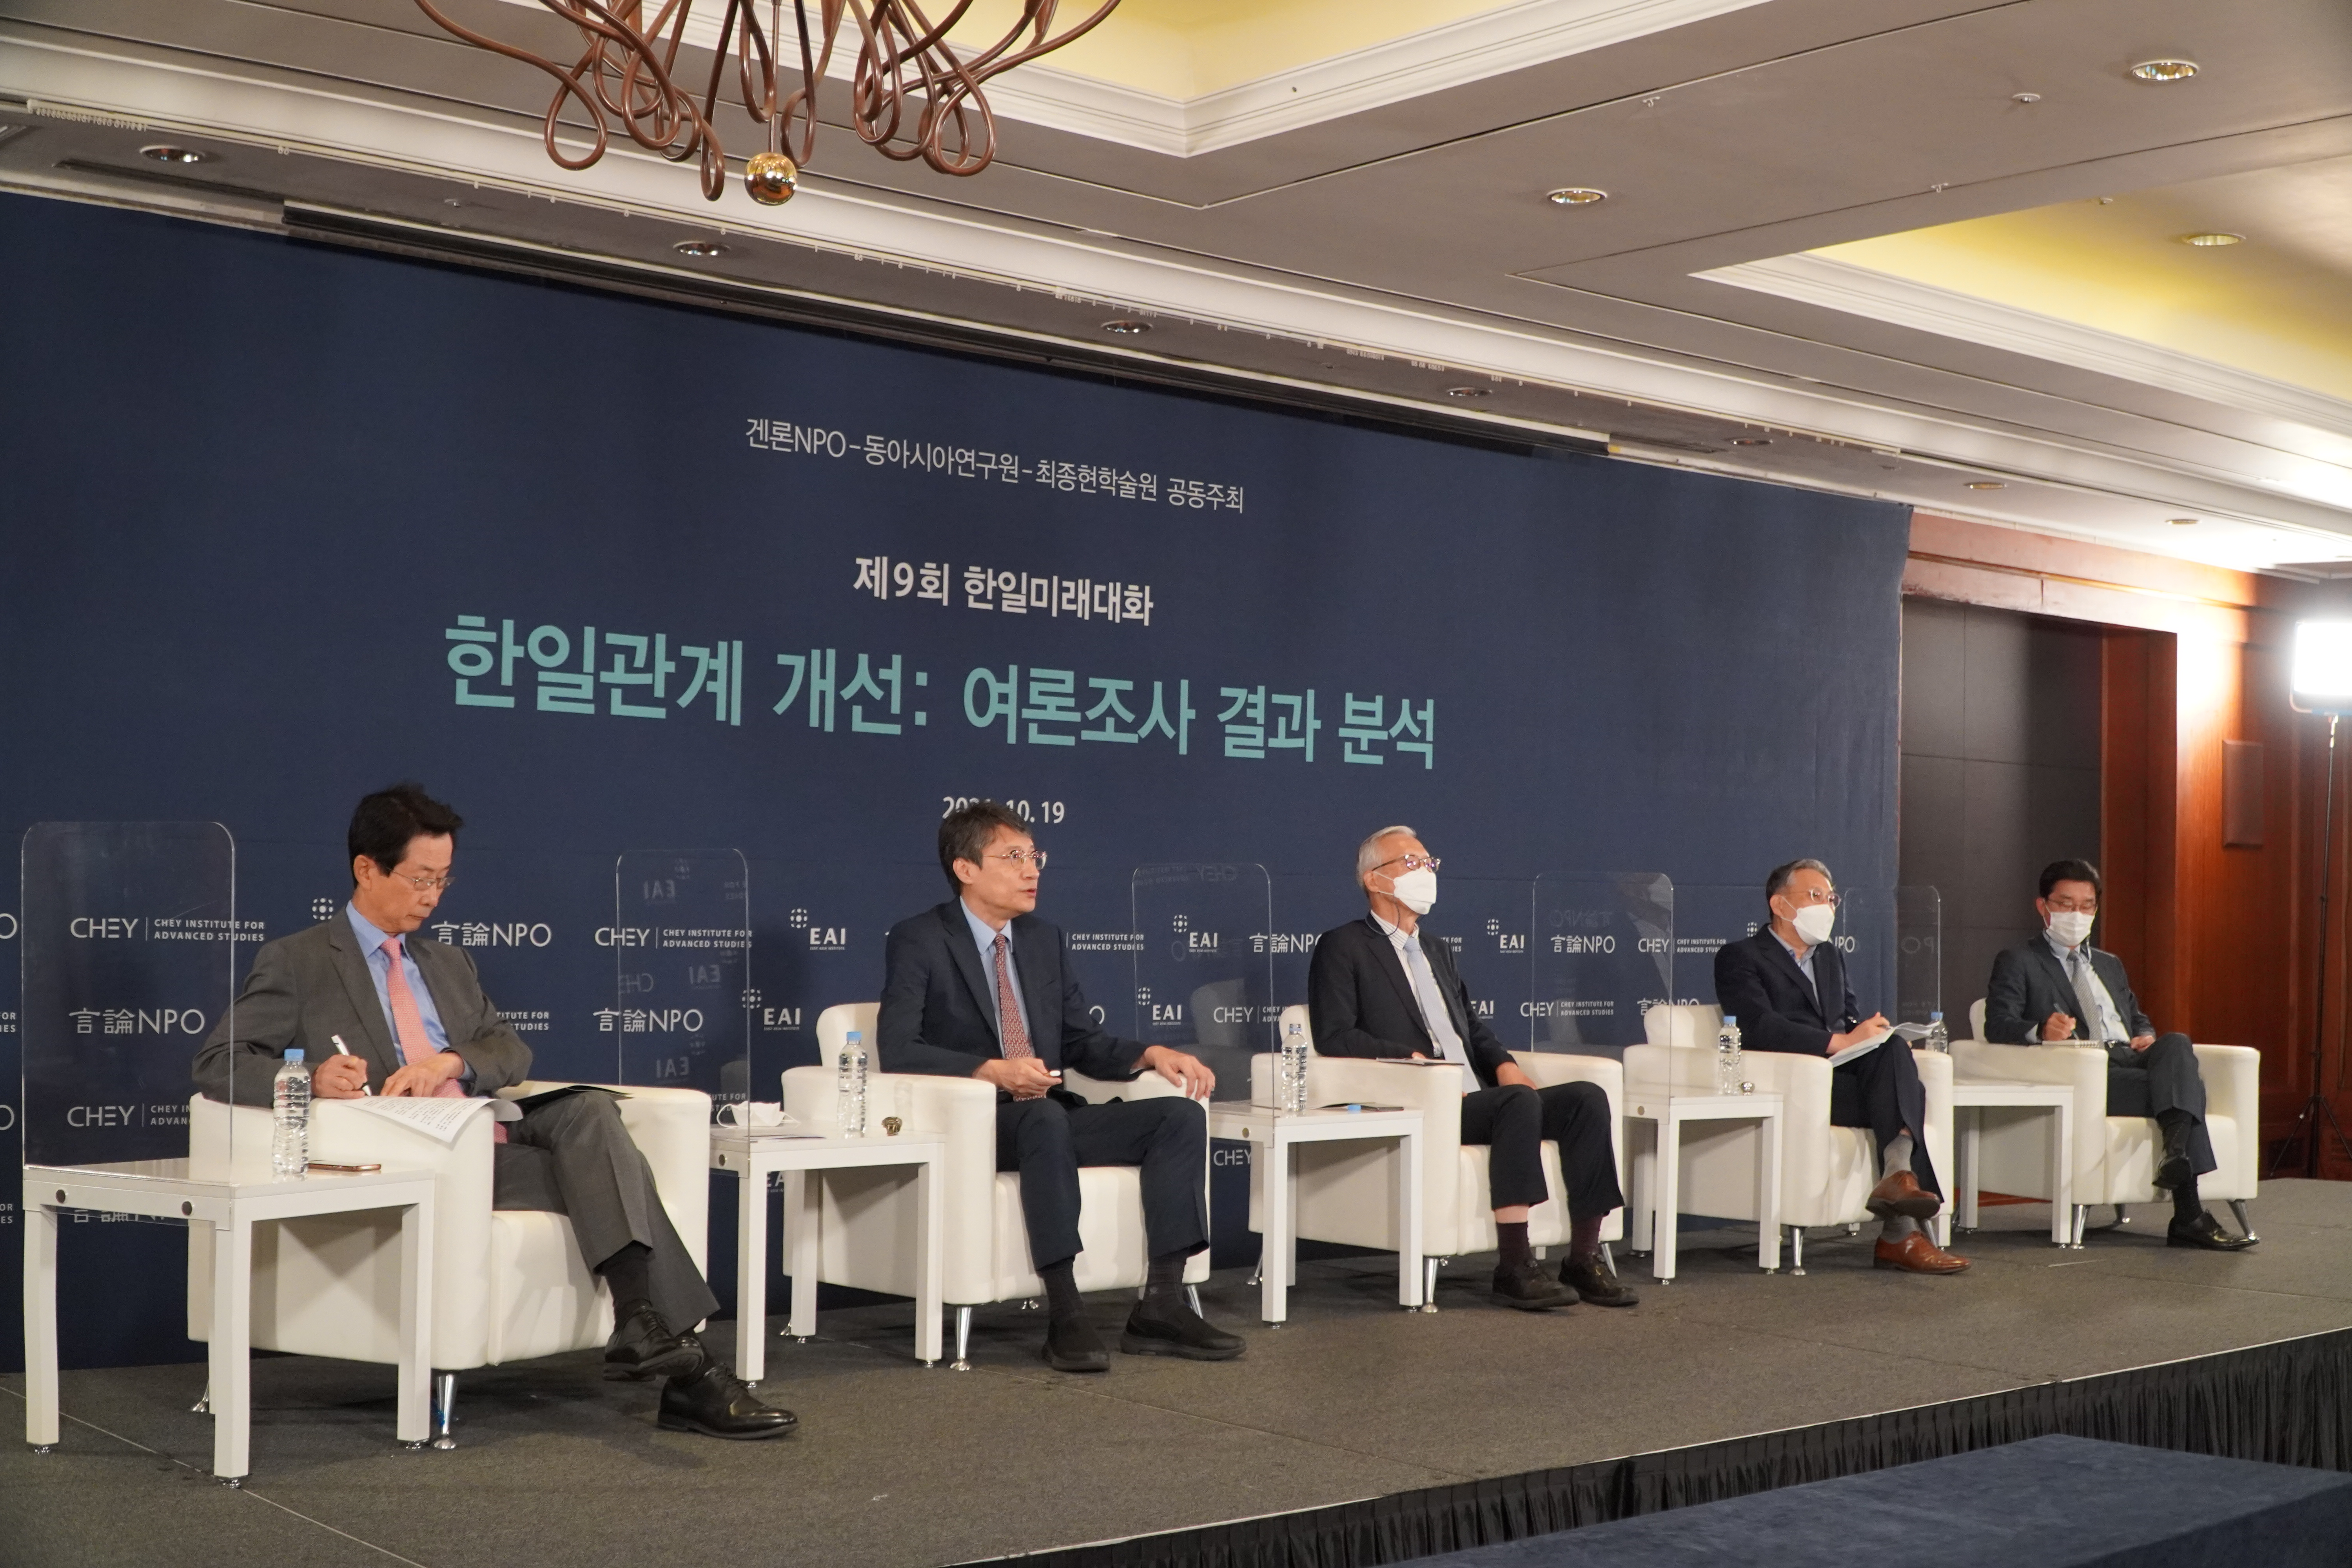 The 9th Korea-Japan Future Dialogue